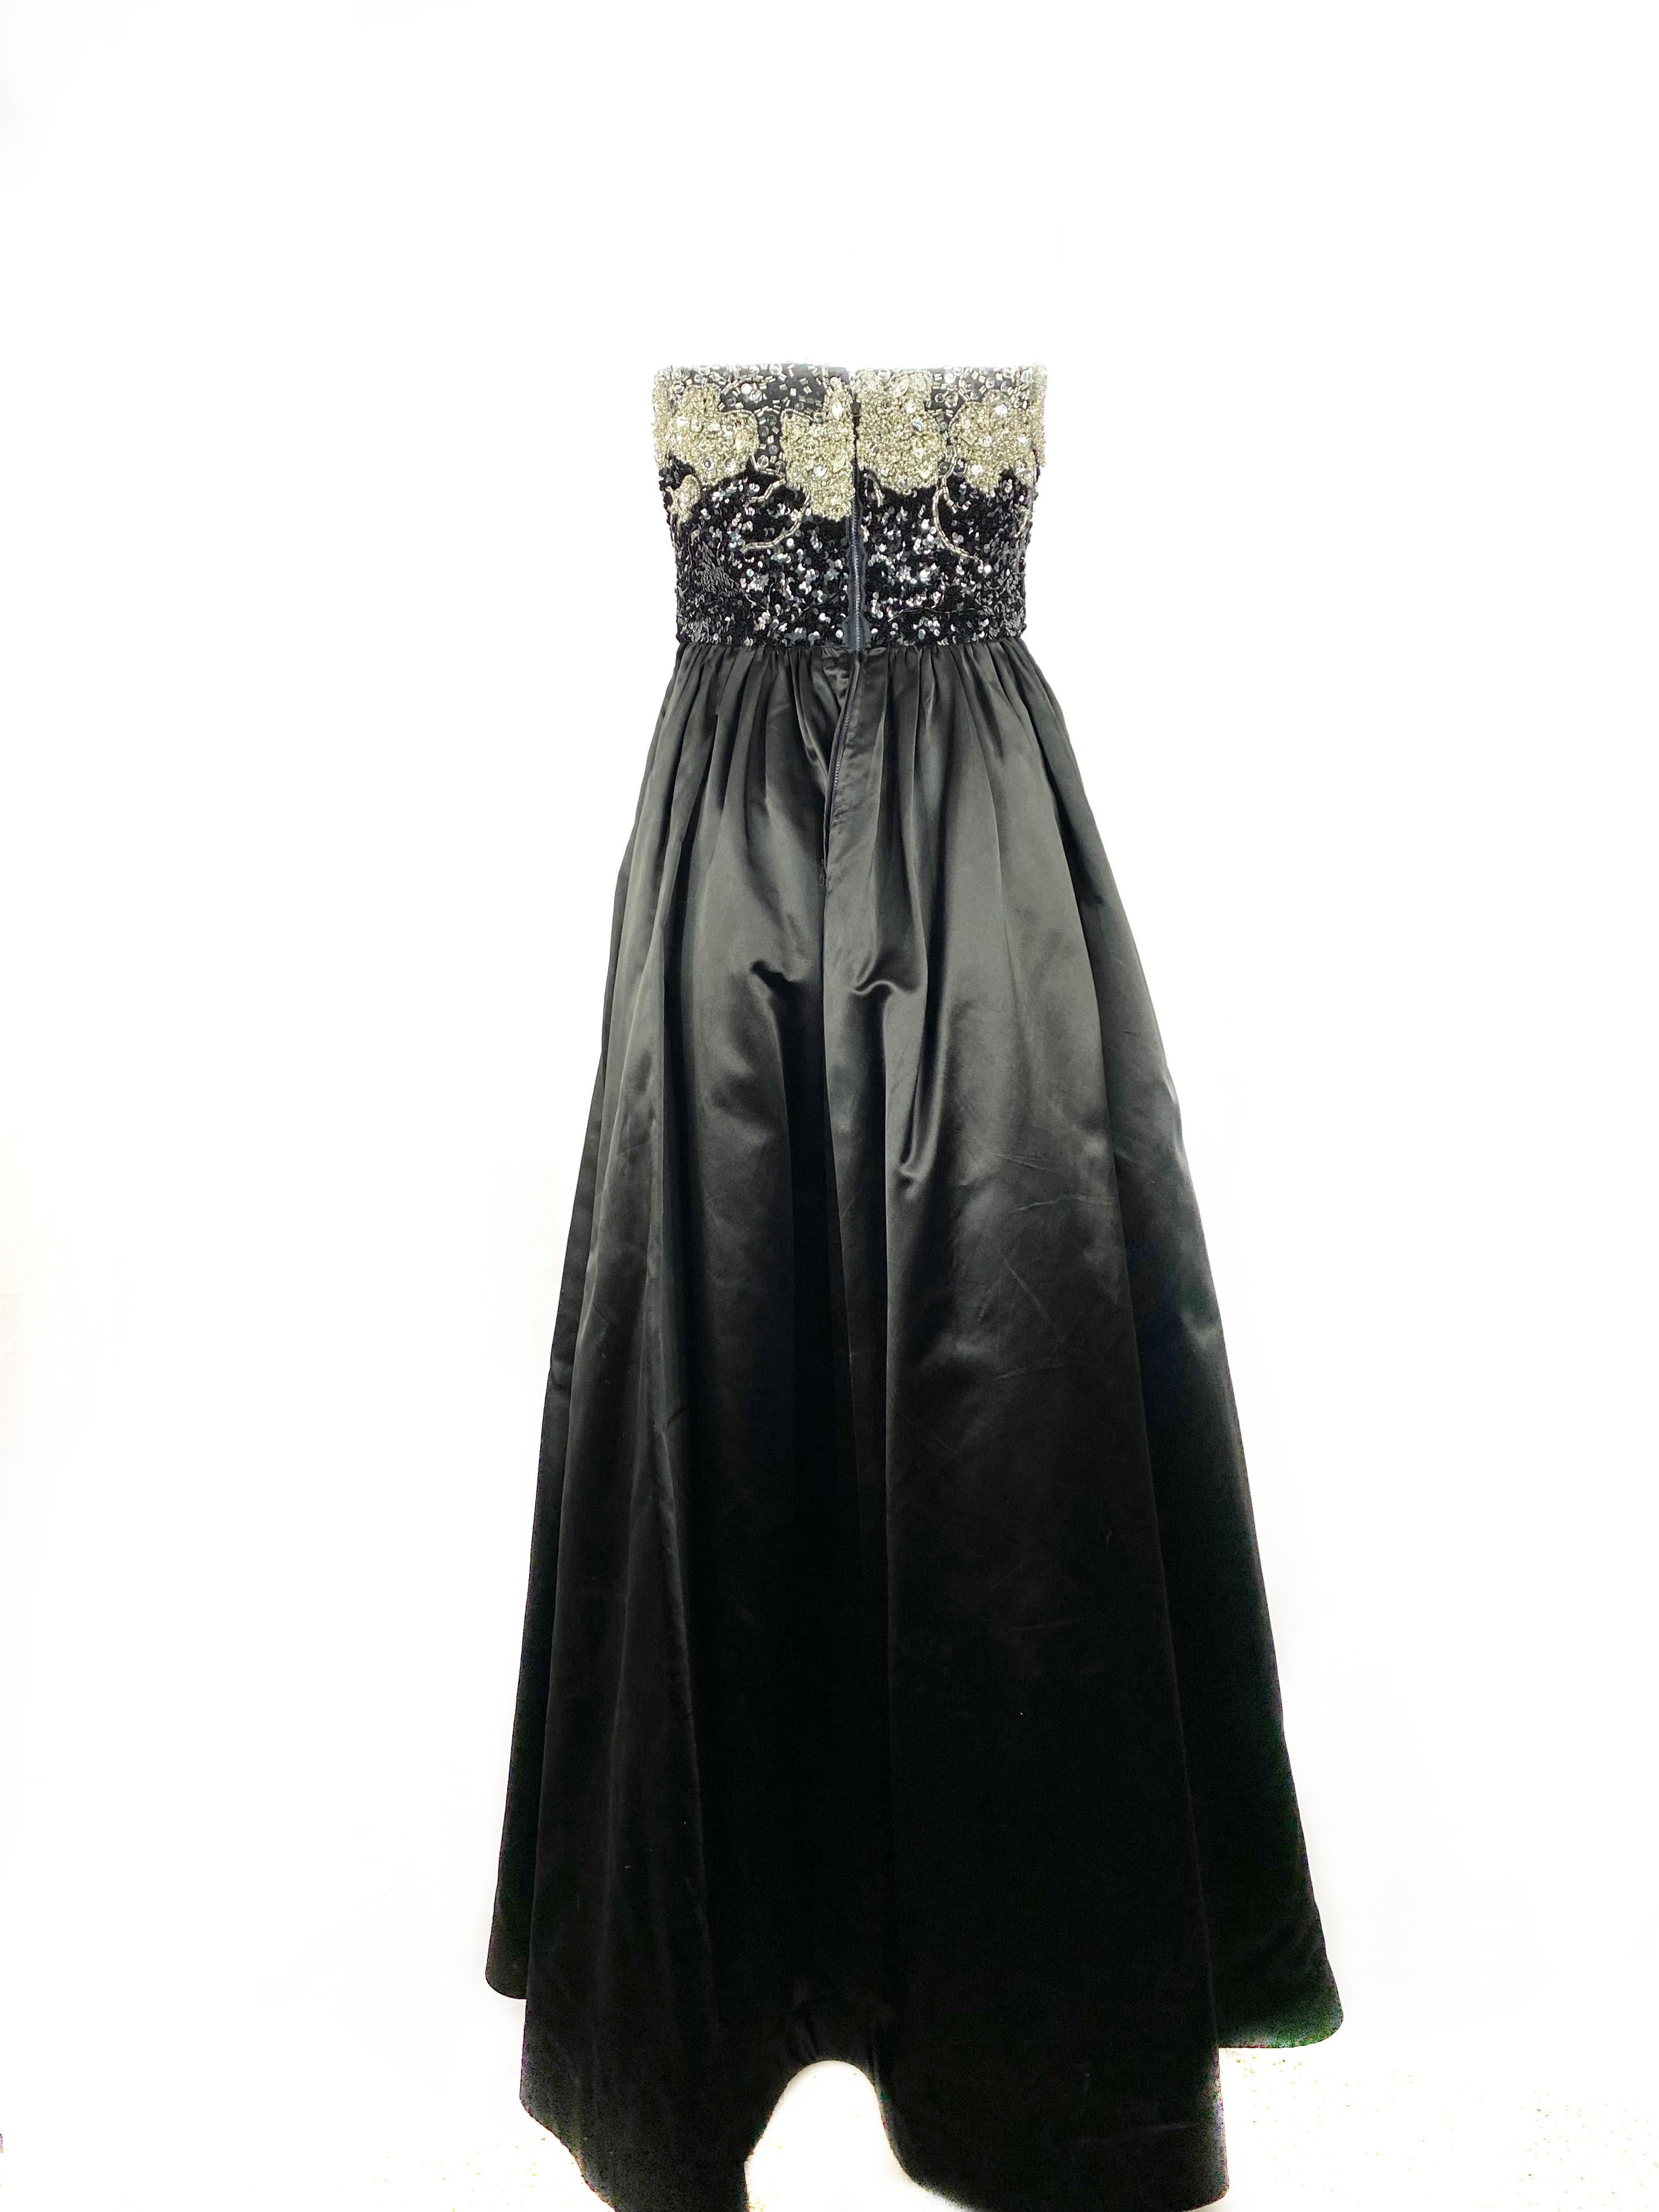 Vintage OSCAR DE LA RENTA Black Silk and Swarovski Maxi Evening Dress Gown  3